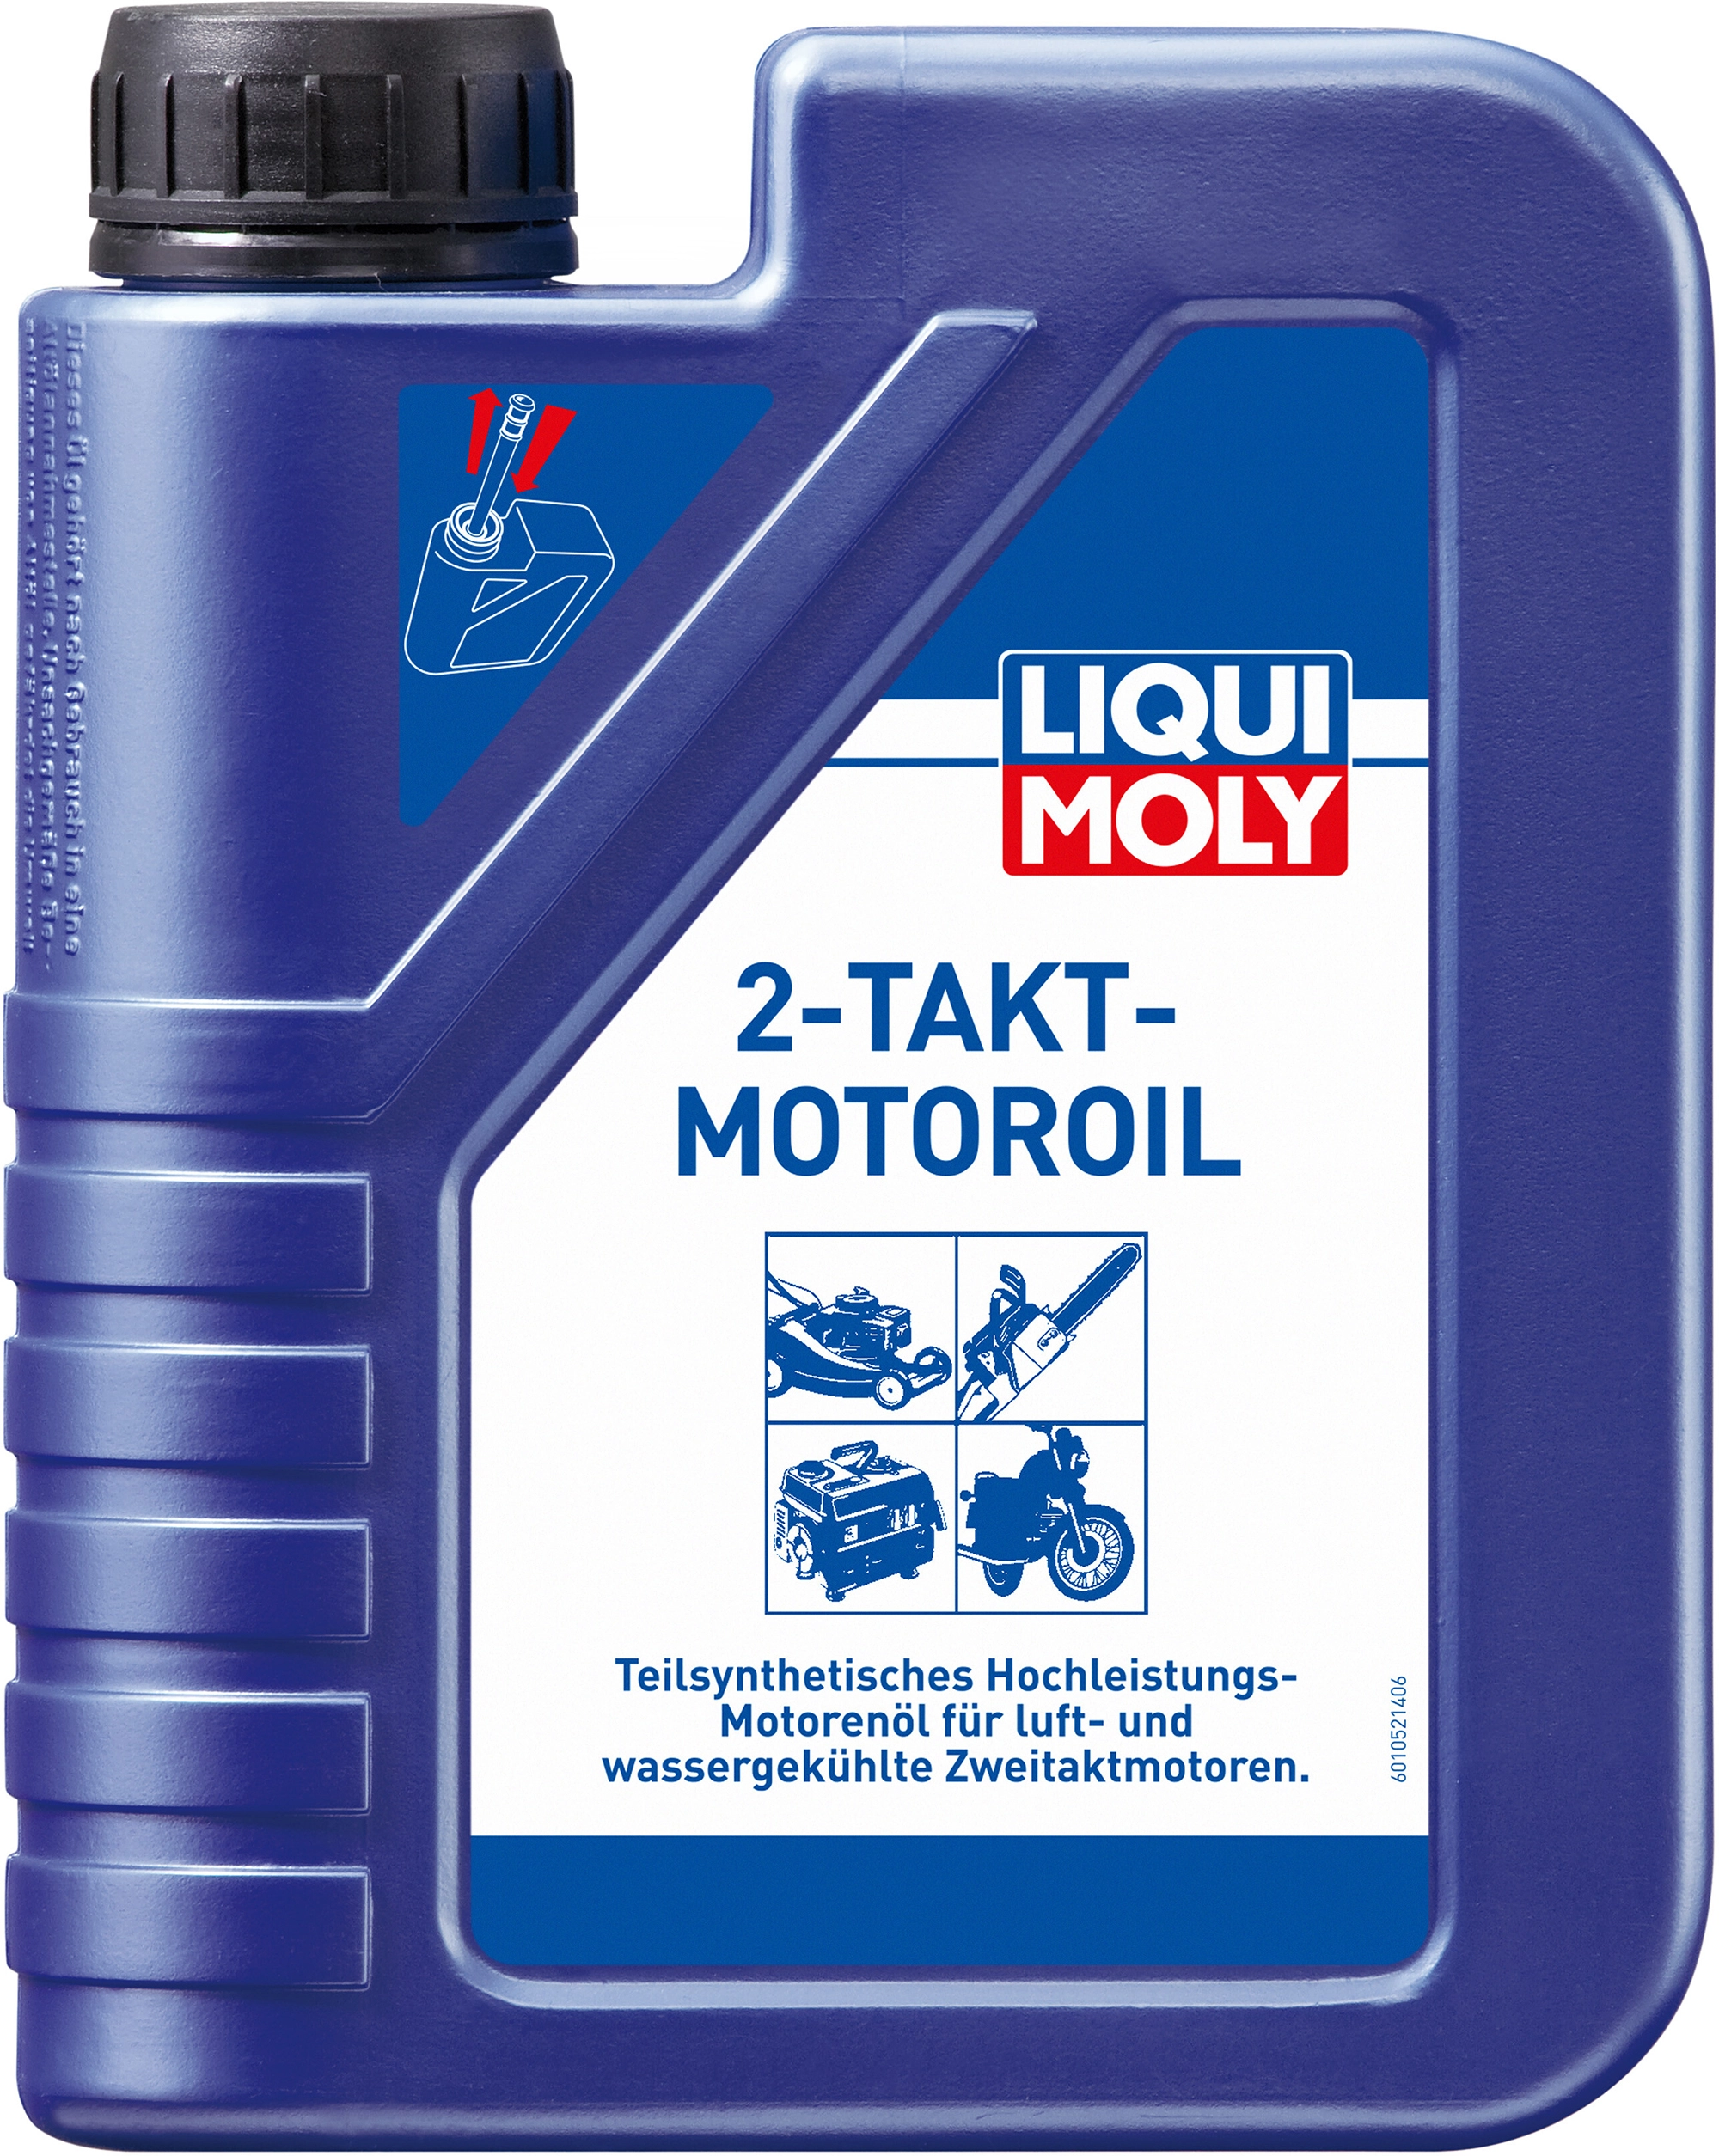 Motorraum-Reiniger – Liqui Moly Shop